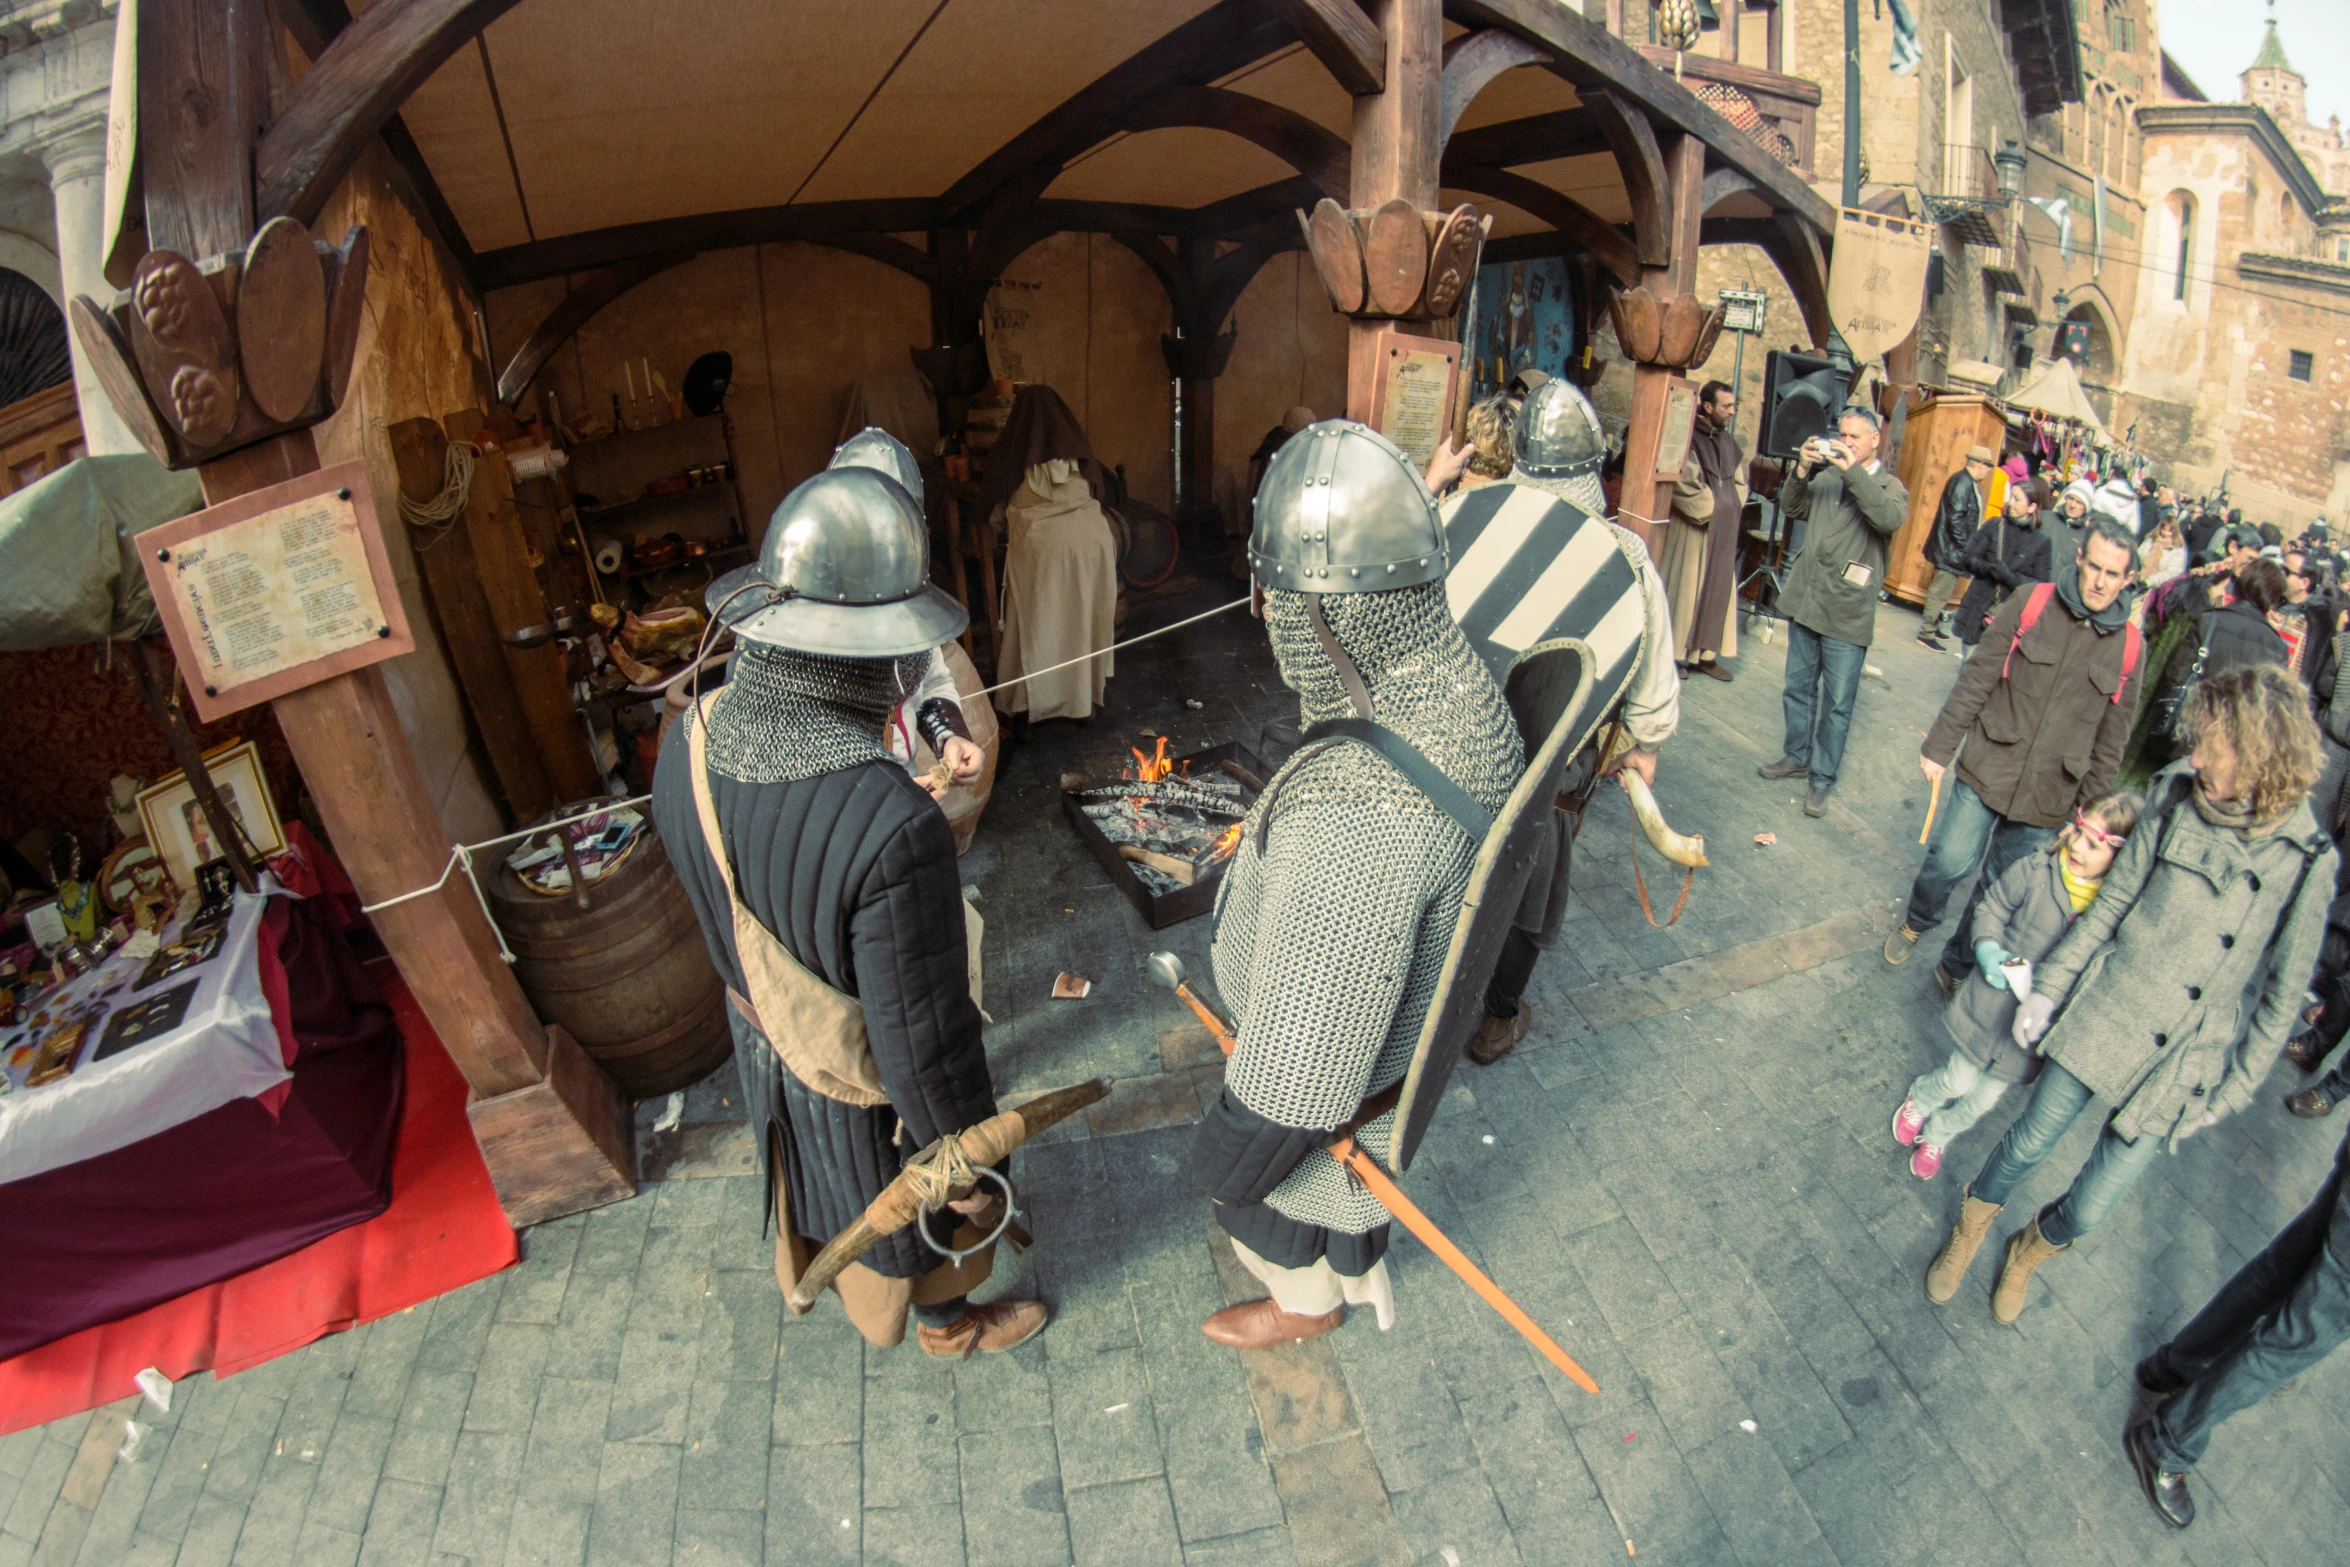 group of knights standing in an open doorway